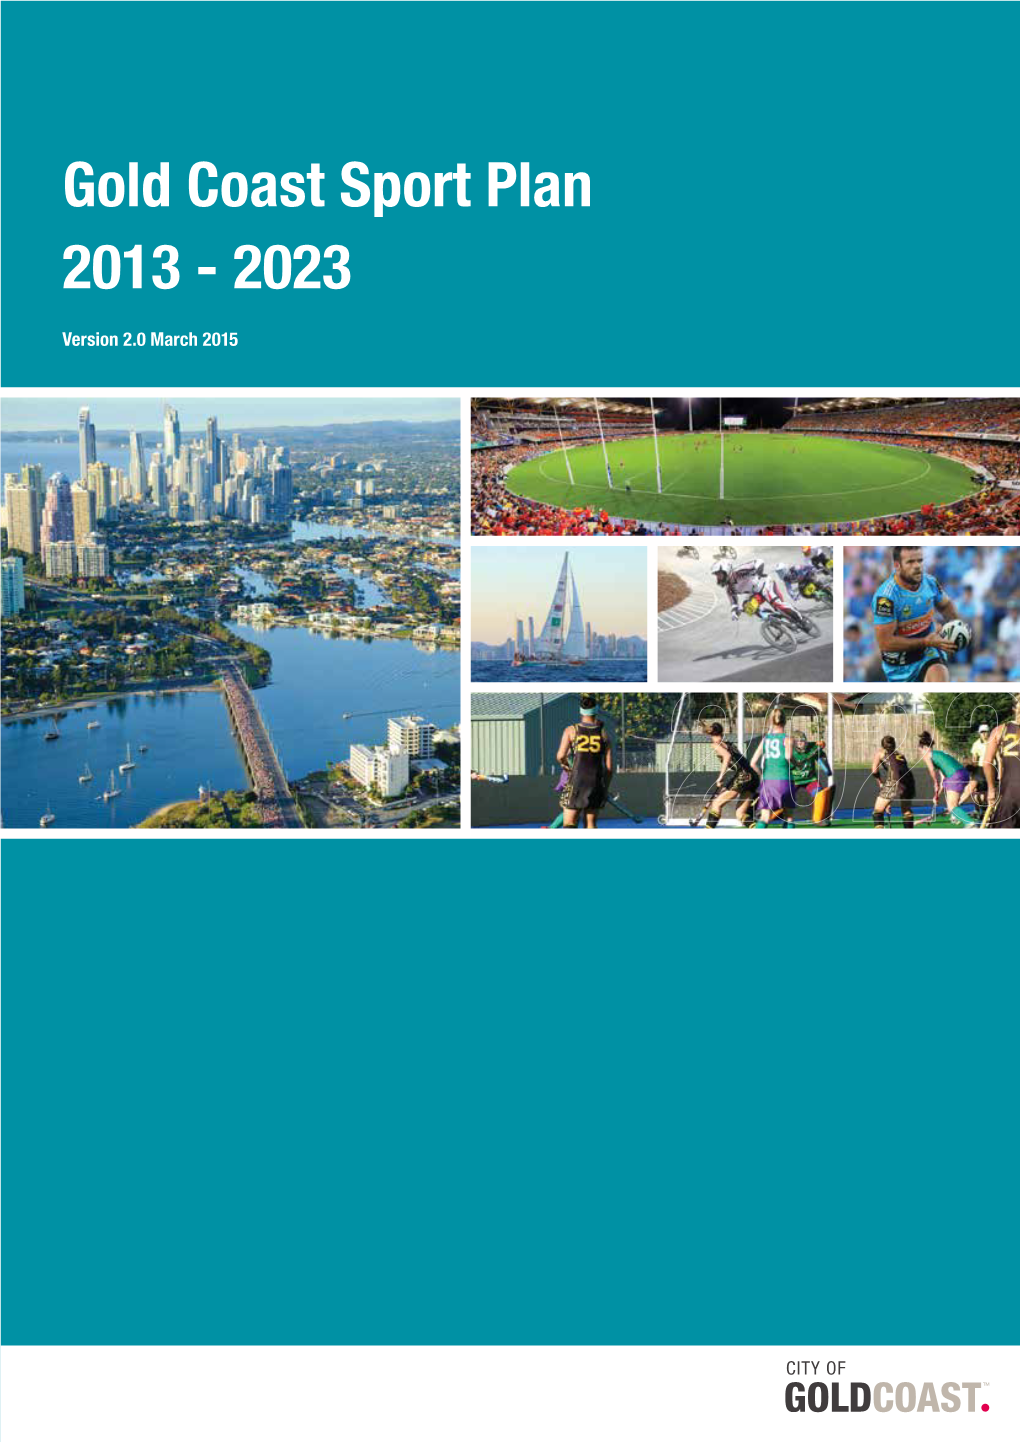 Gold Coast Sport Plan 2013 - 2023